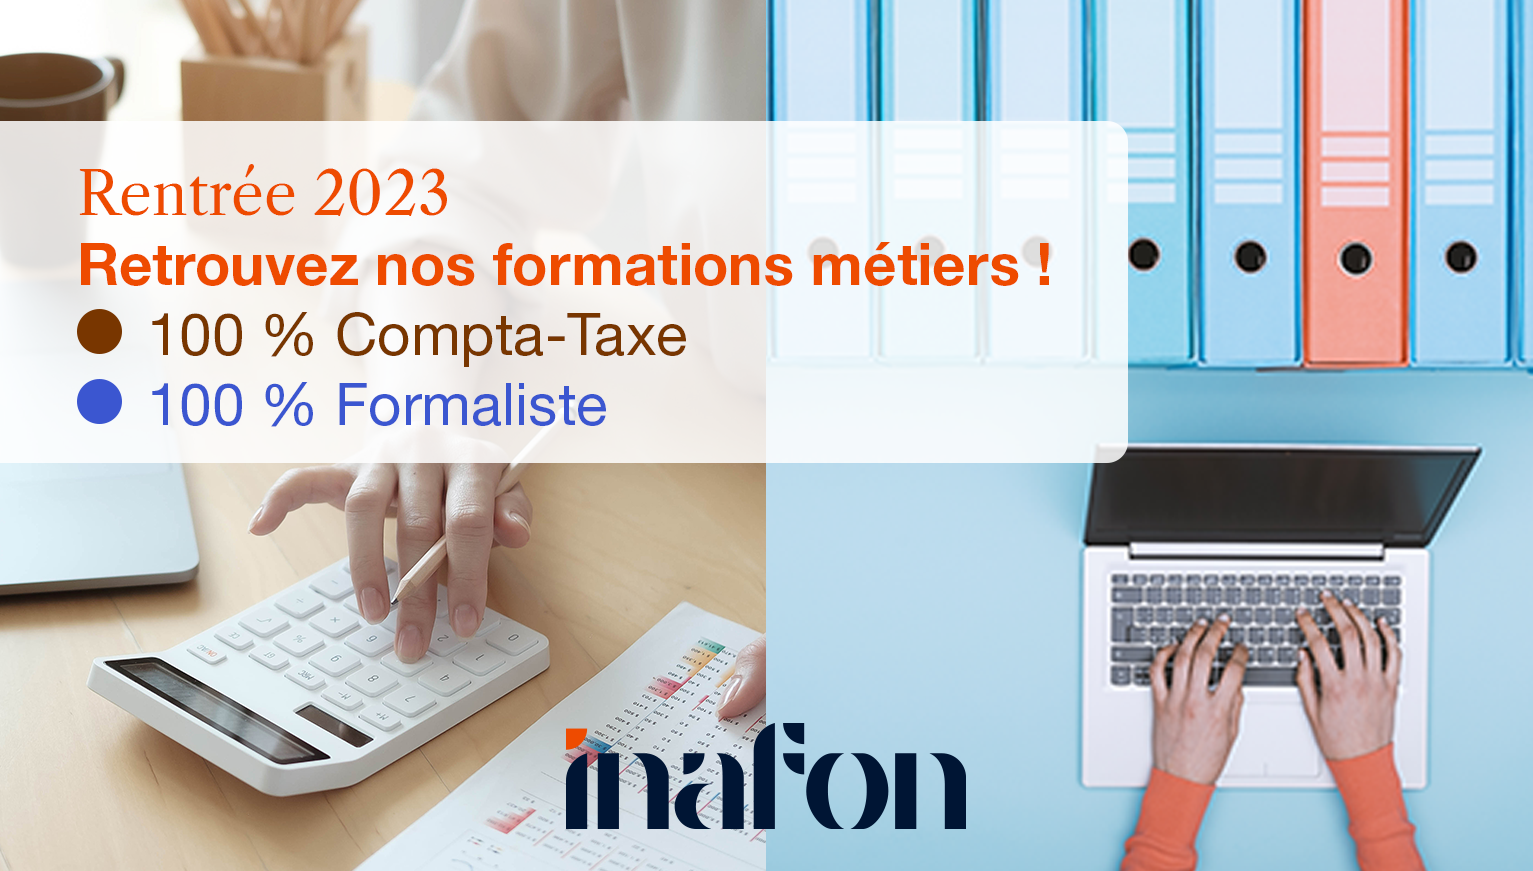 actu-inafon-formations-metiers-2023-6454f90e2175a012584578.png